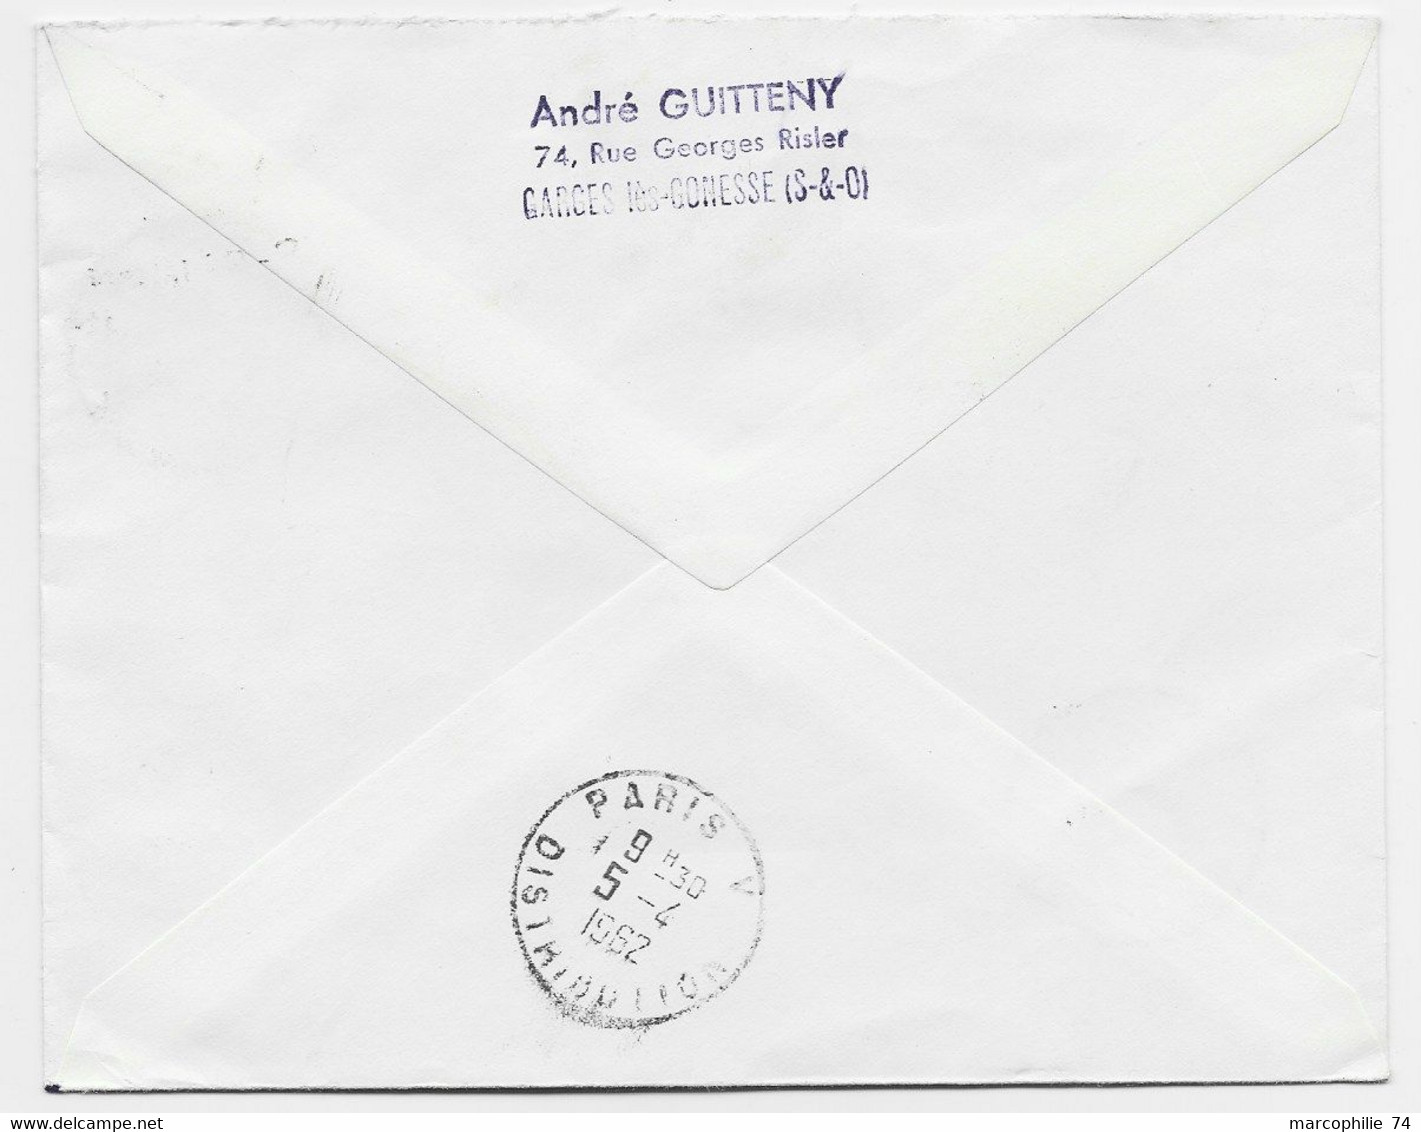 FRANCE 50C+45C LETTRE REC TIMBRE A DATE ASNIERES ANNEXE MOBILE N°1 4.4.1962 SEINE GARCHES - Manual Postmarks